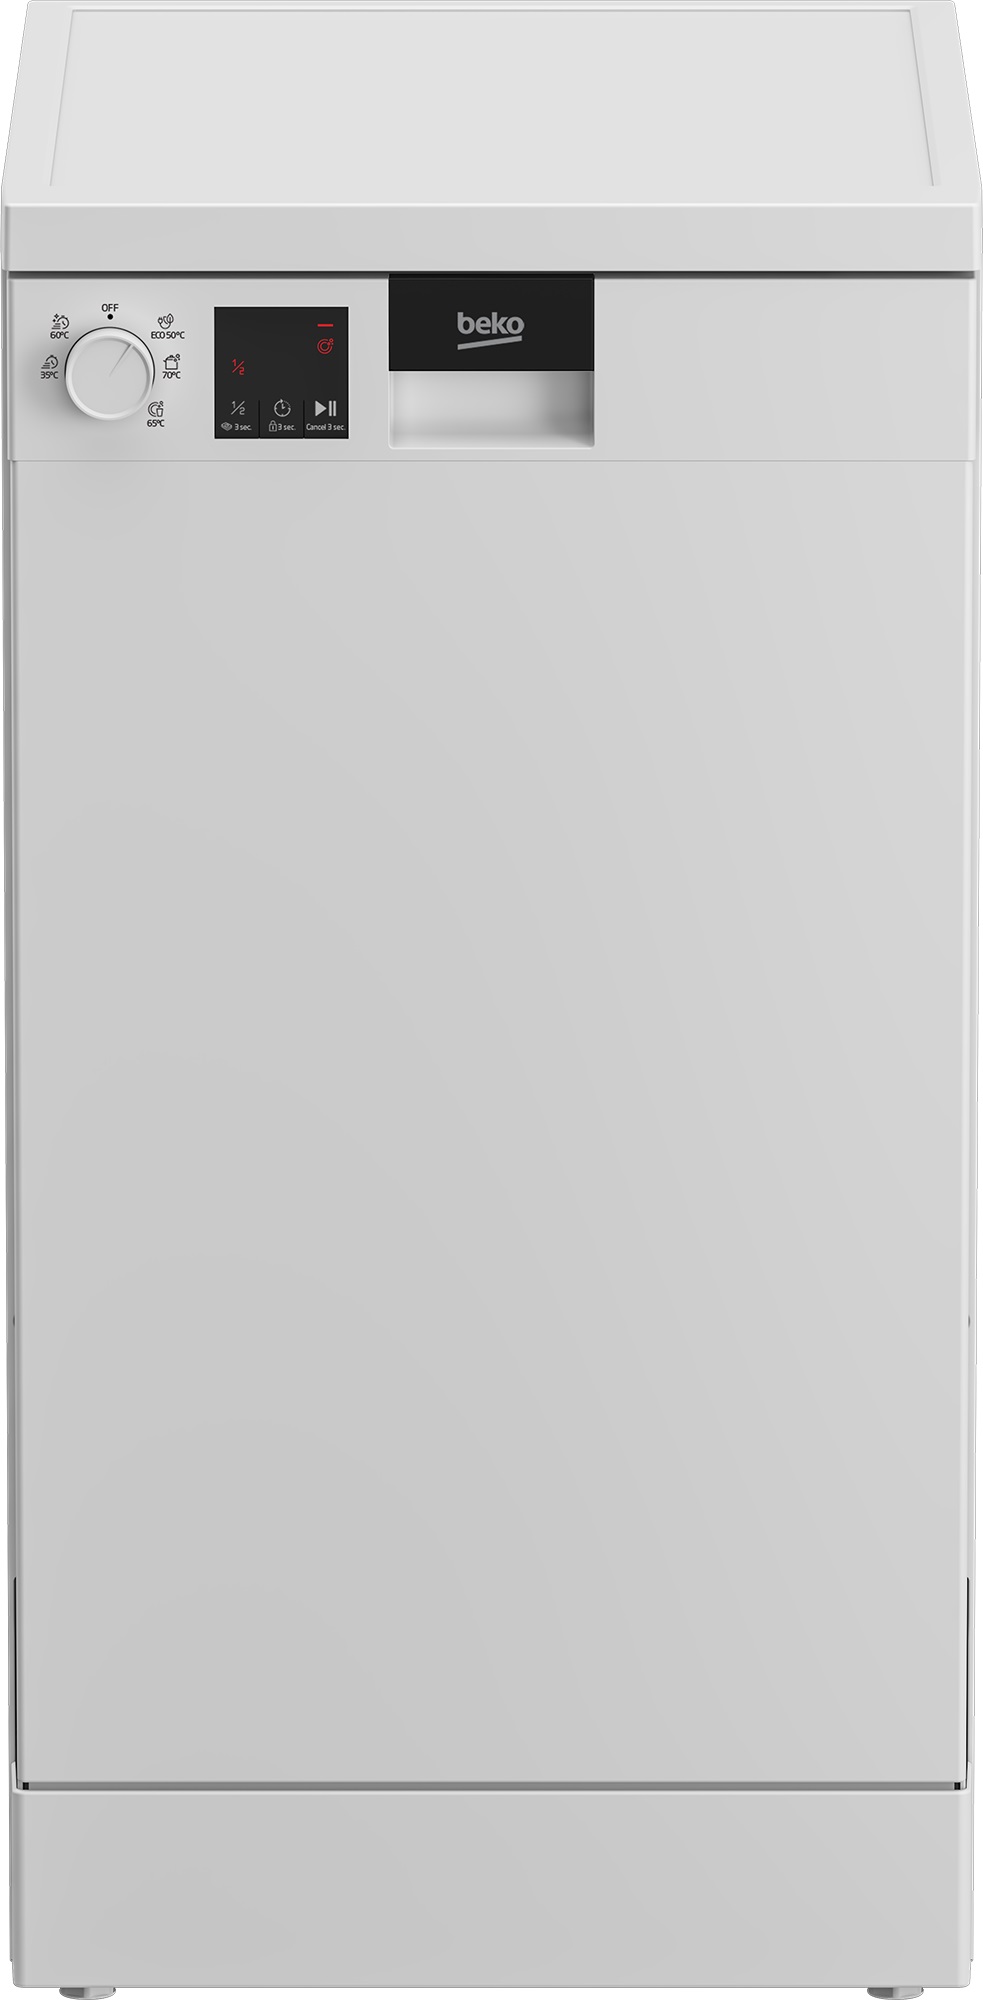 Посудомоечная машина Beko DVS050R01W белый посудомоечная машина beko bdfn15421s gray